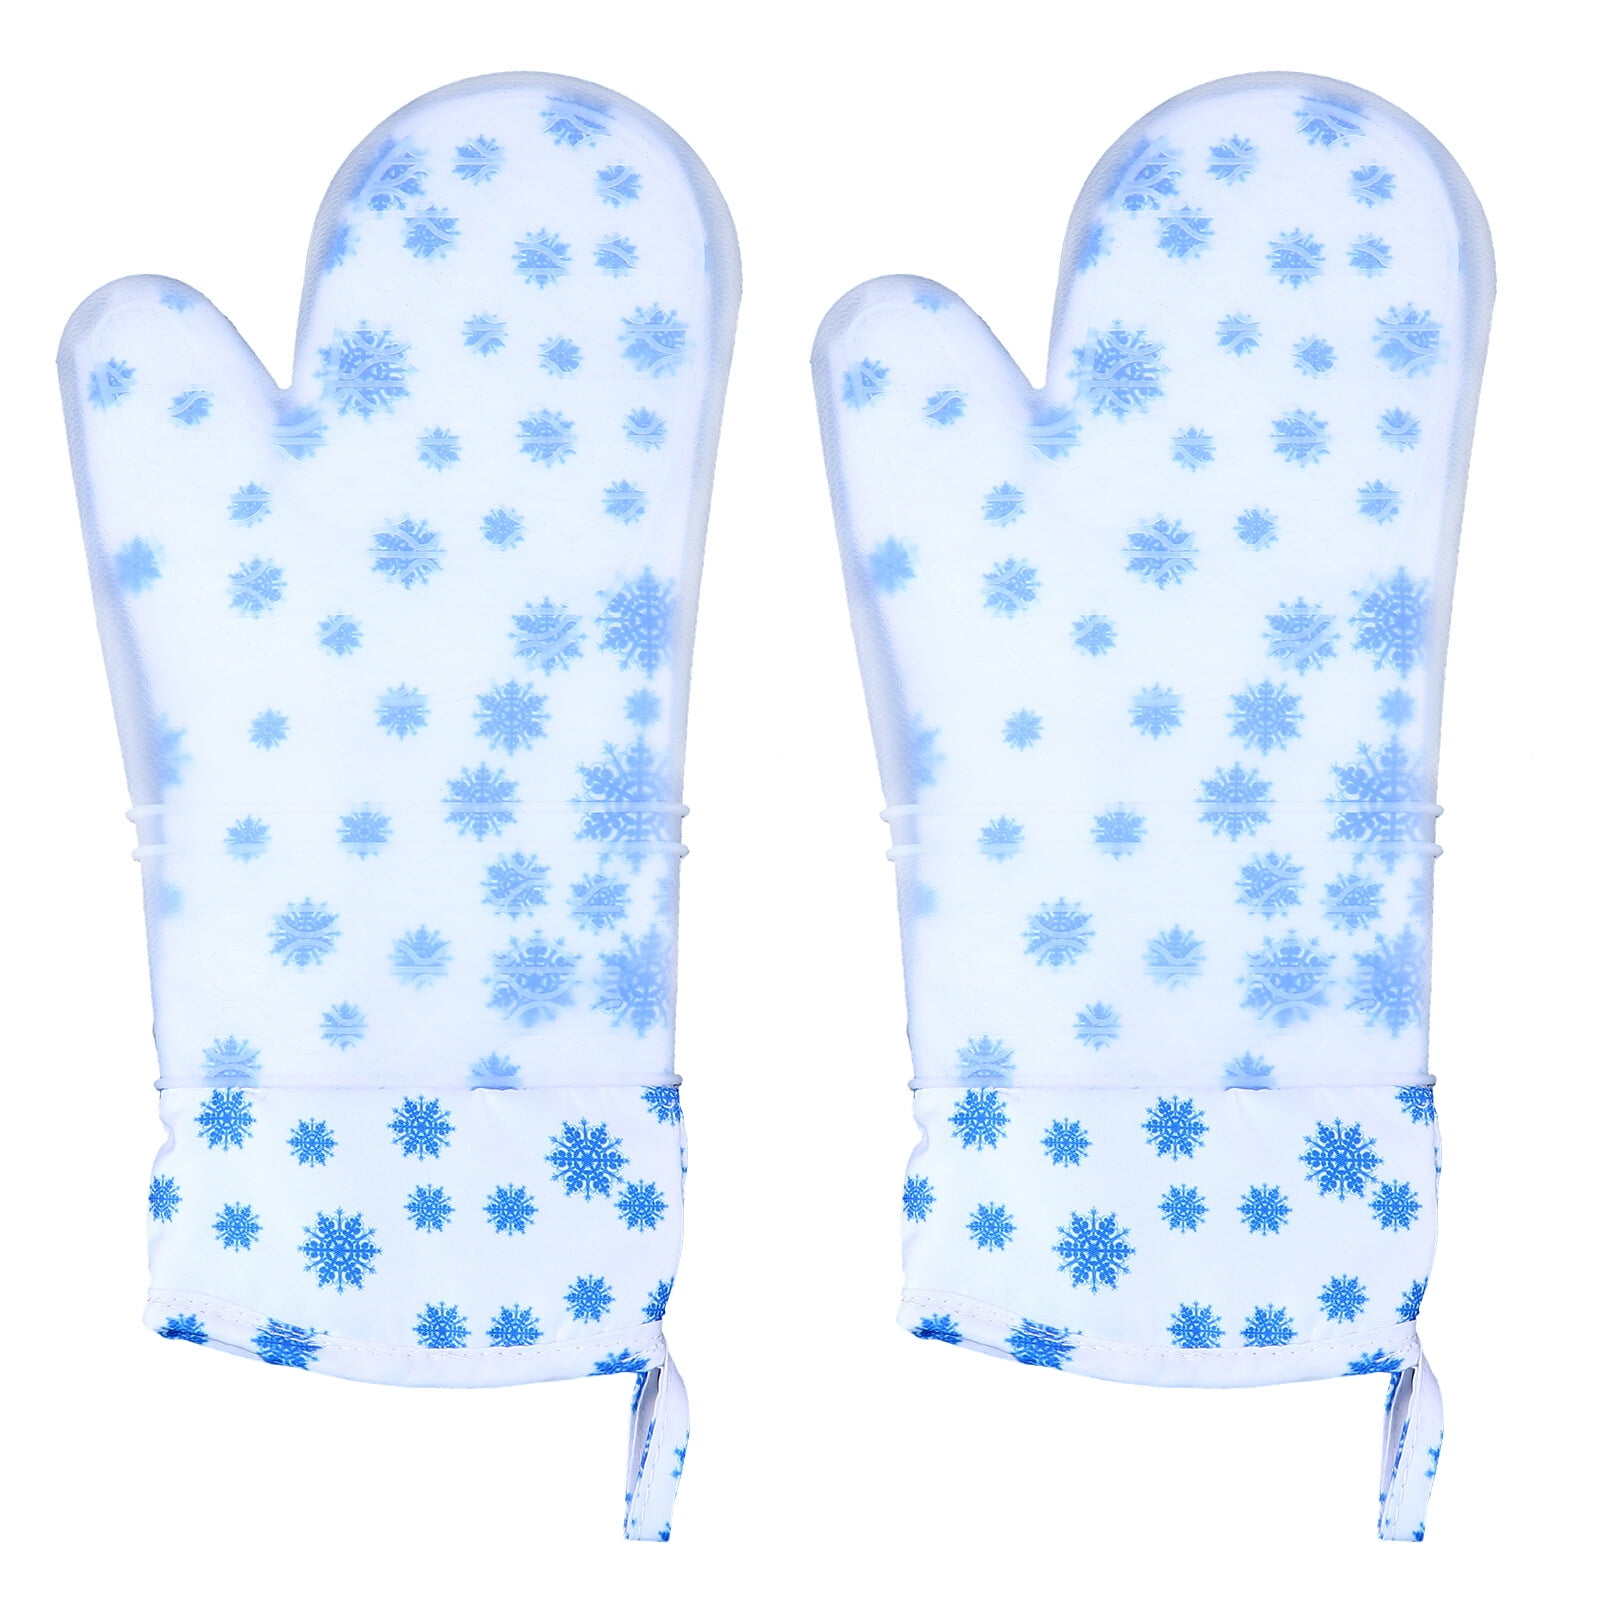 Cotton Oven Mitts Heat Resistant Polar Bear Pattern Gloves Pot Holder 1 Pair - Blue+White